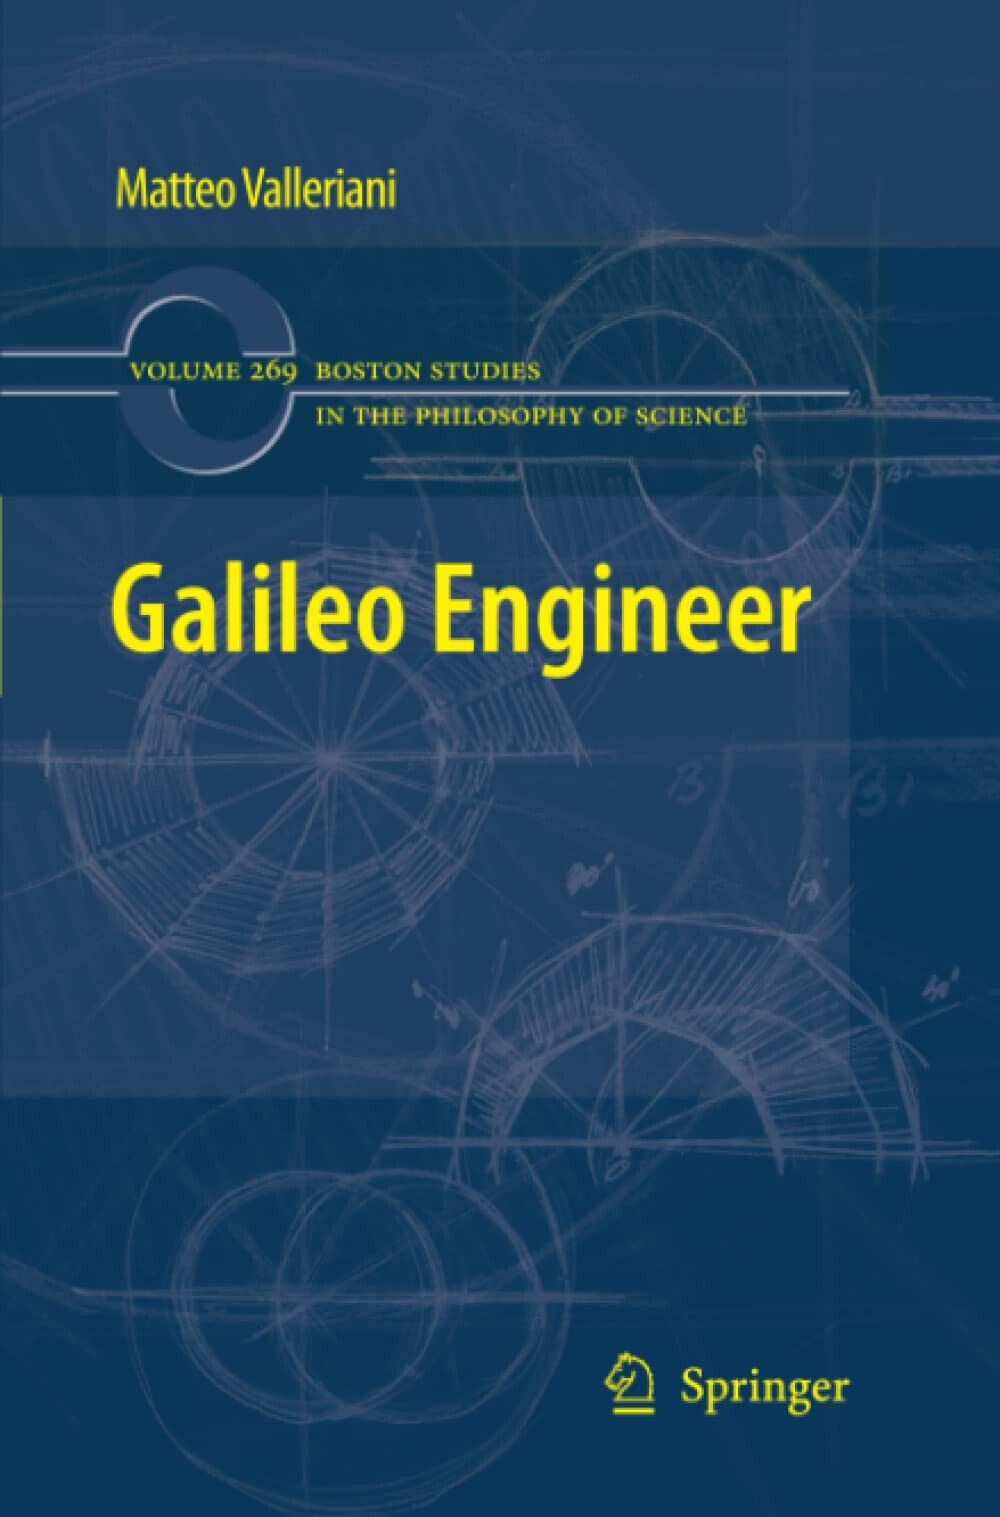 Galileo Engineer - Matteo Valleriani - Springer, 2012